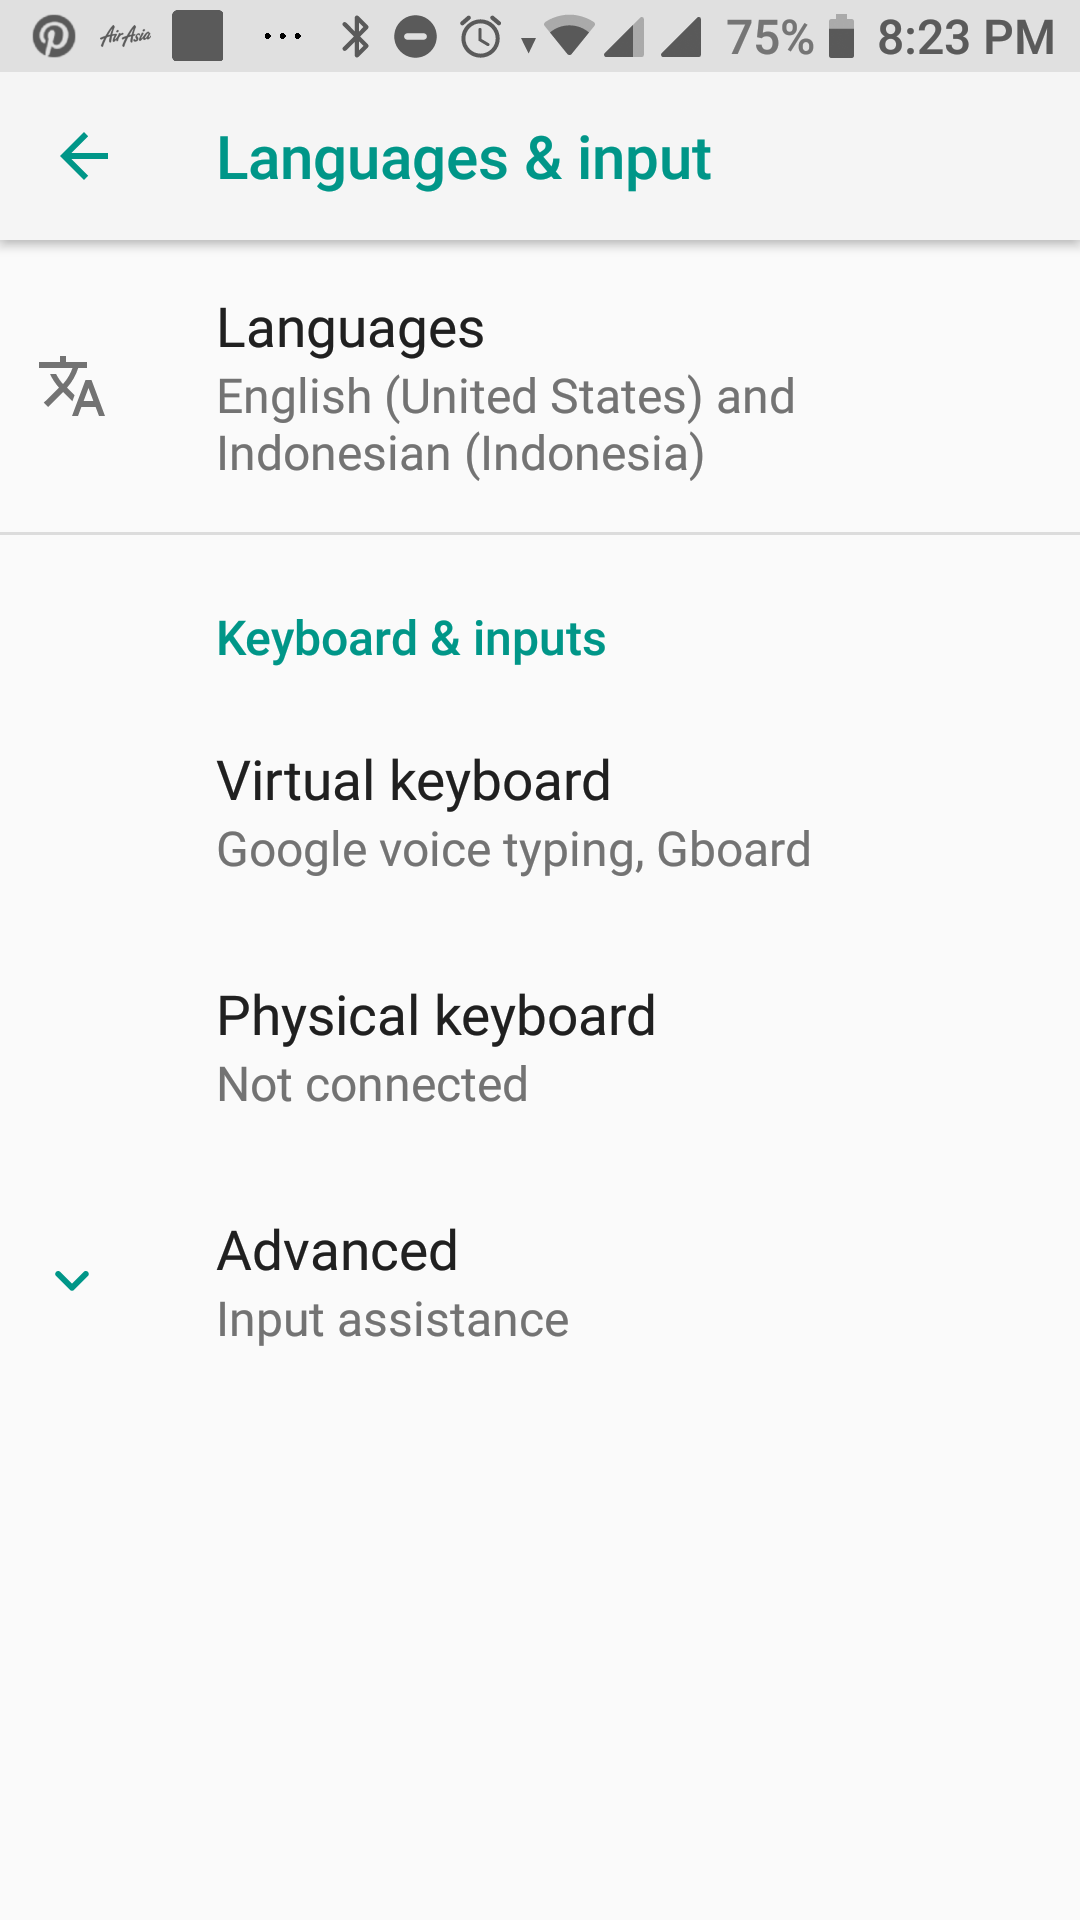 2 berikutnya pilih menu languages and input untuk keyboard and inputs pilih google voice typing di virtual keyboard